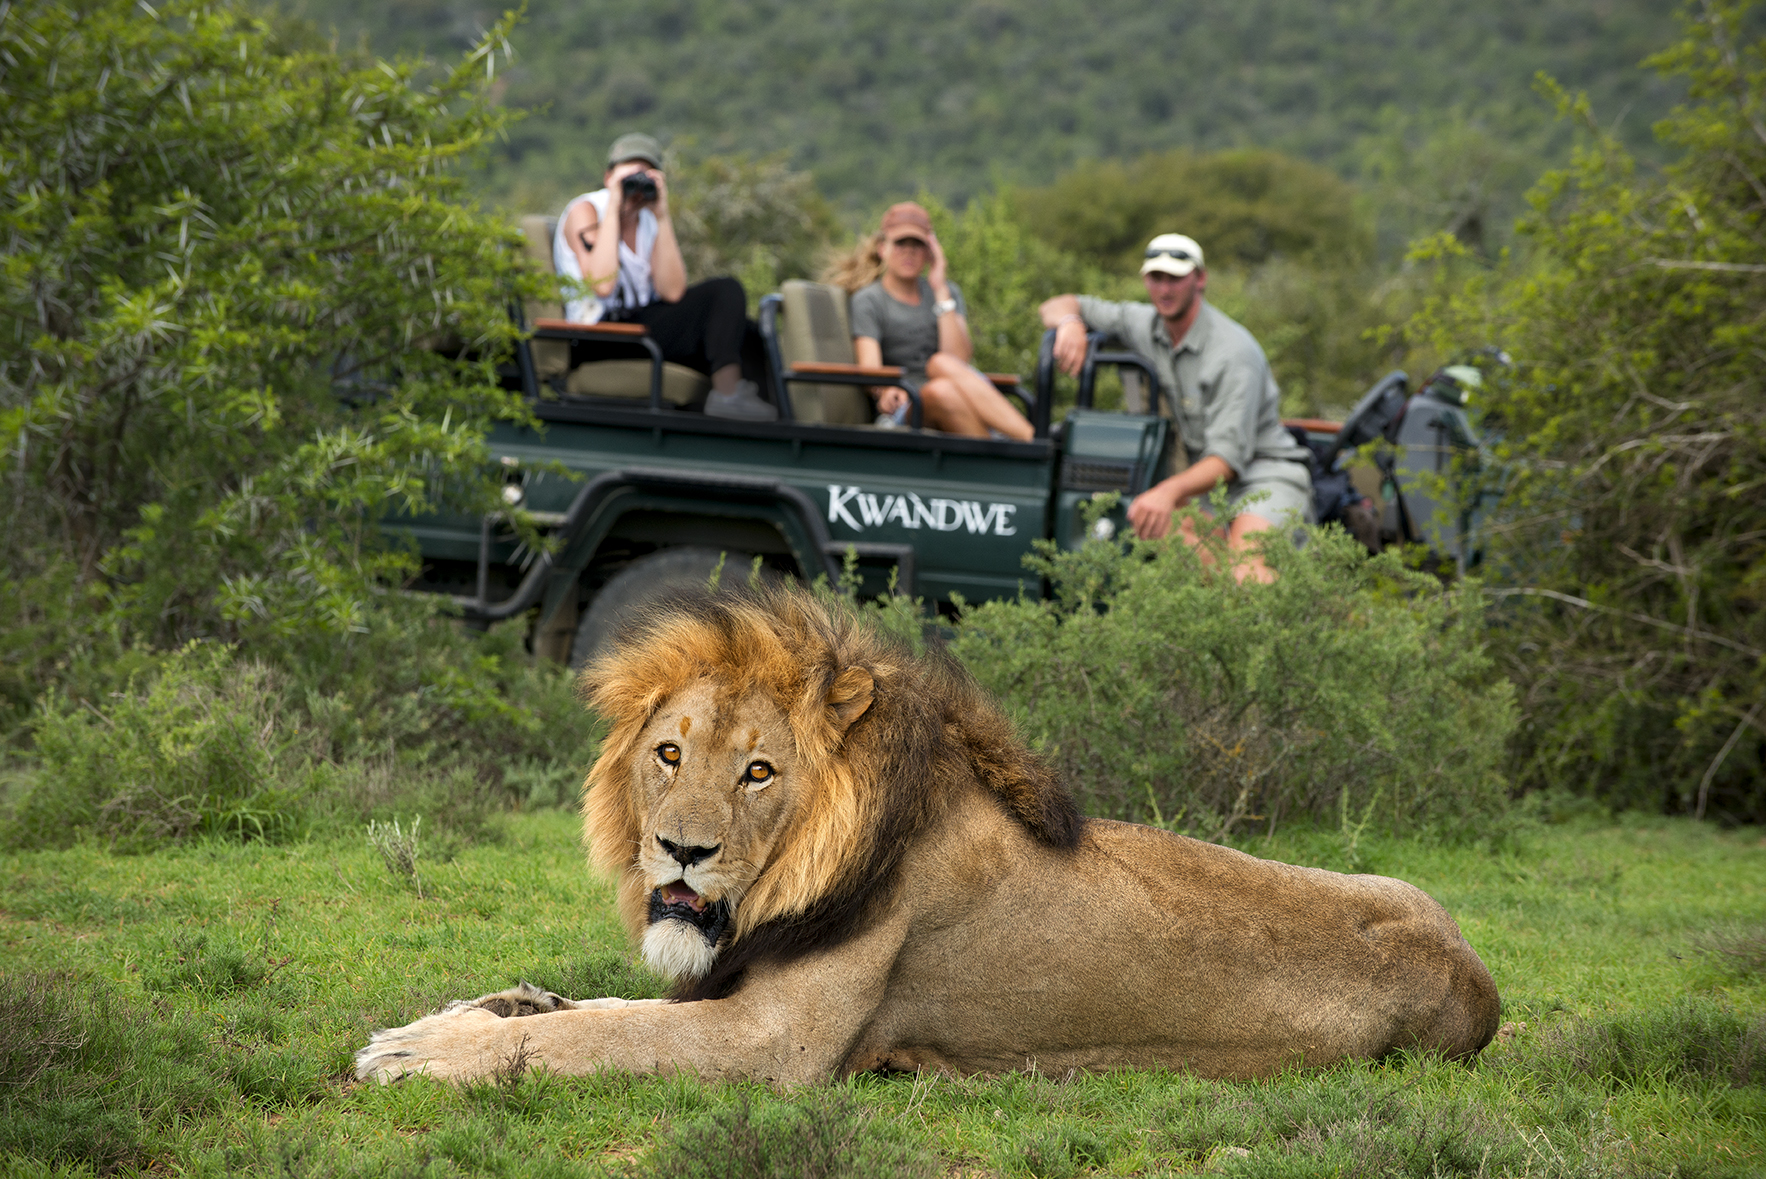 Safari Adventure at Kawande